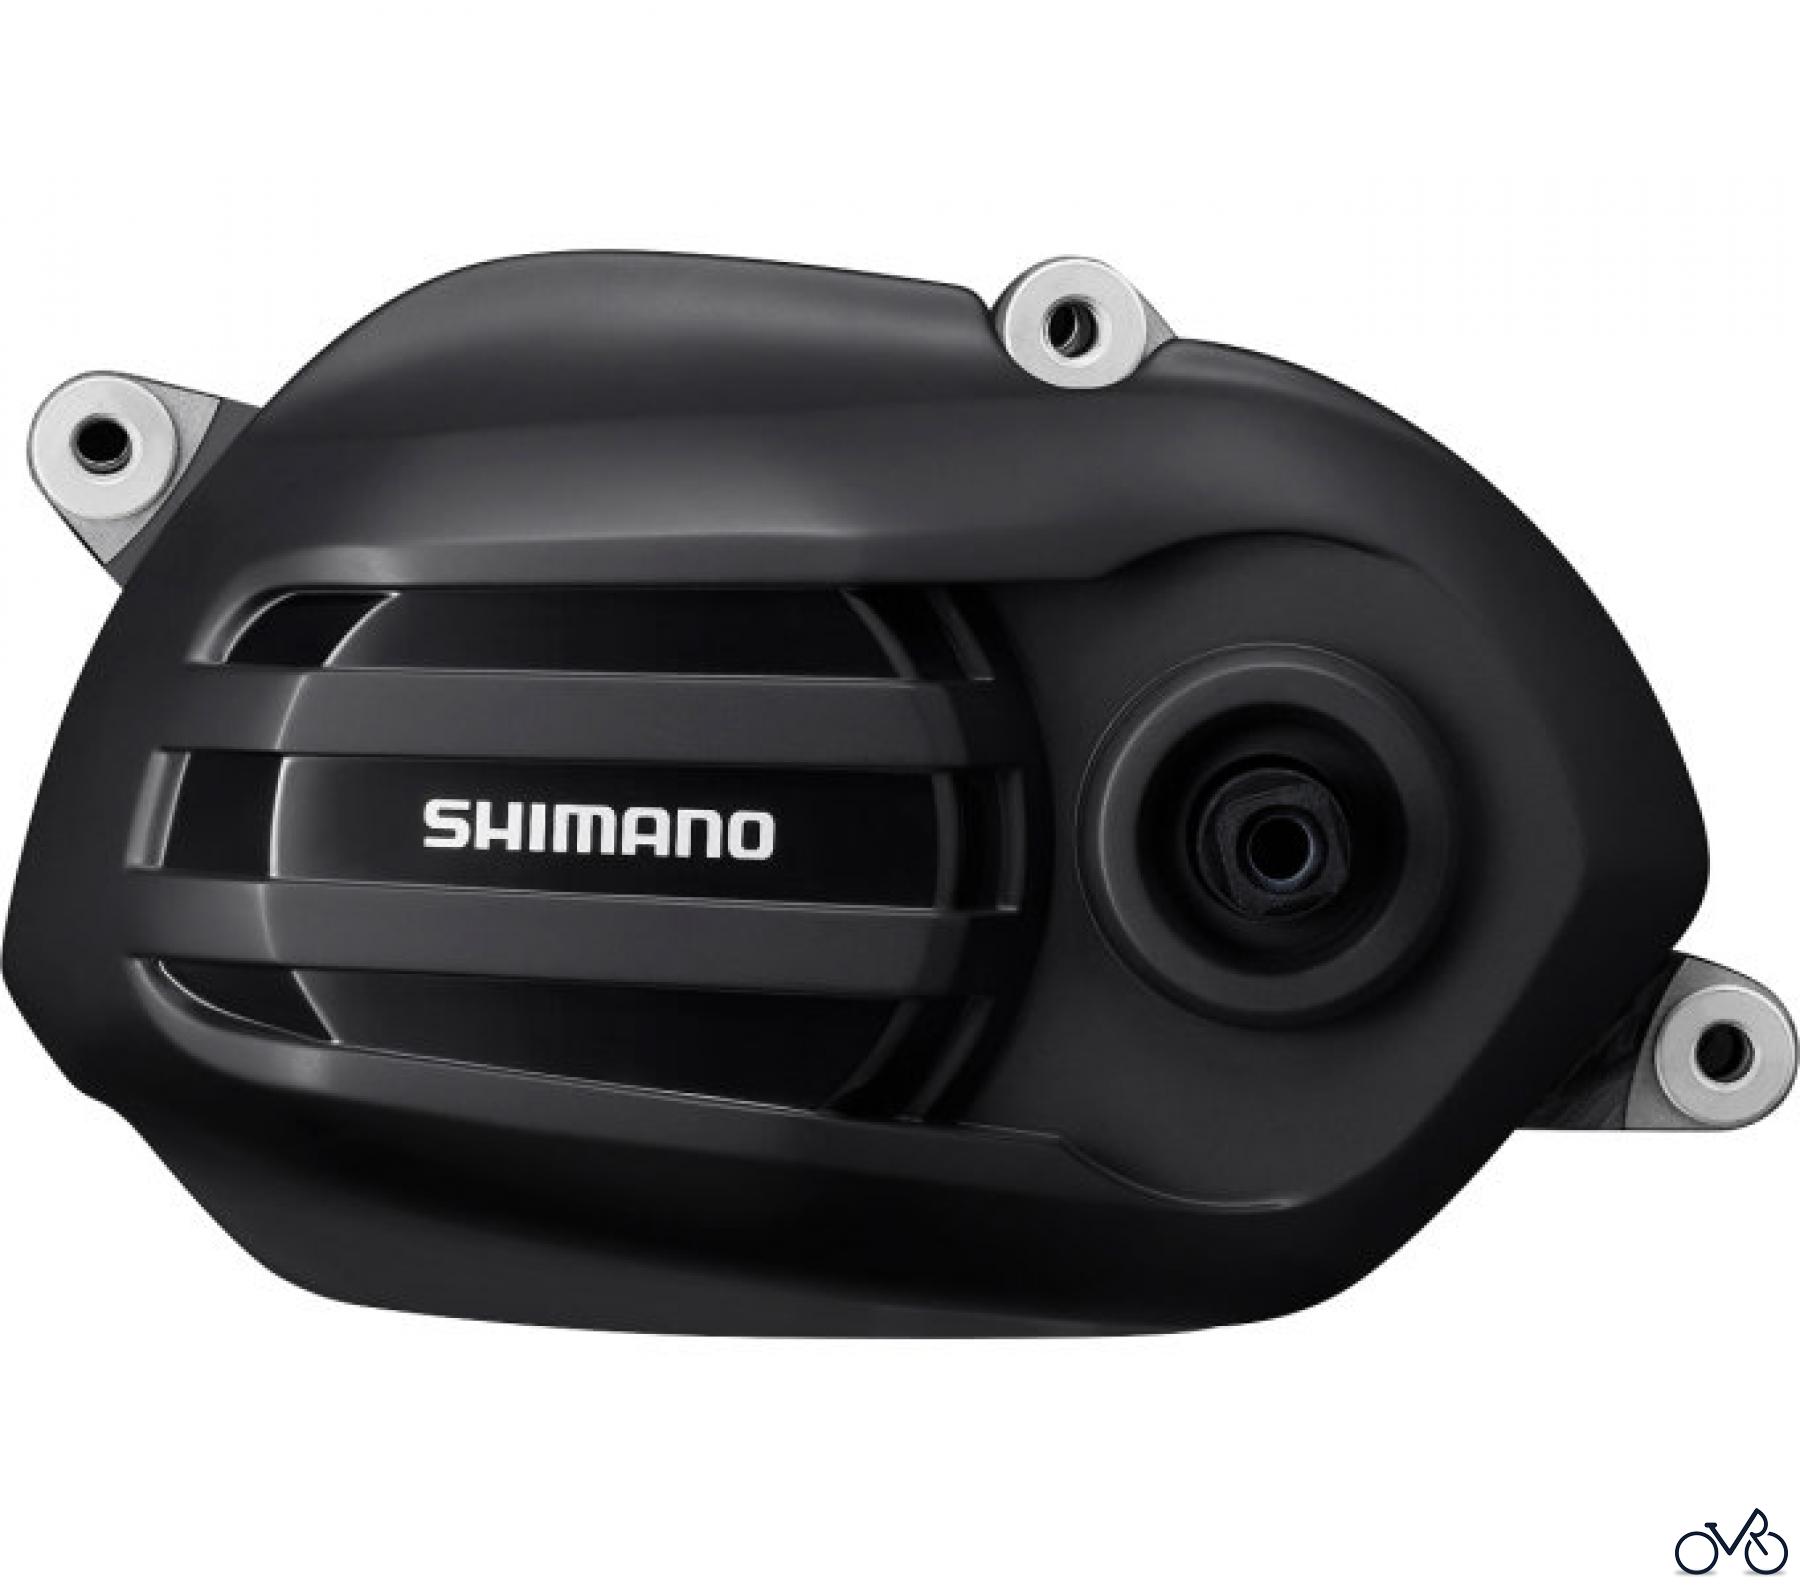  Shimano DU Drive Unit Antriebseinheit (E-Bike)